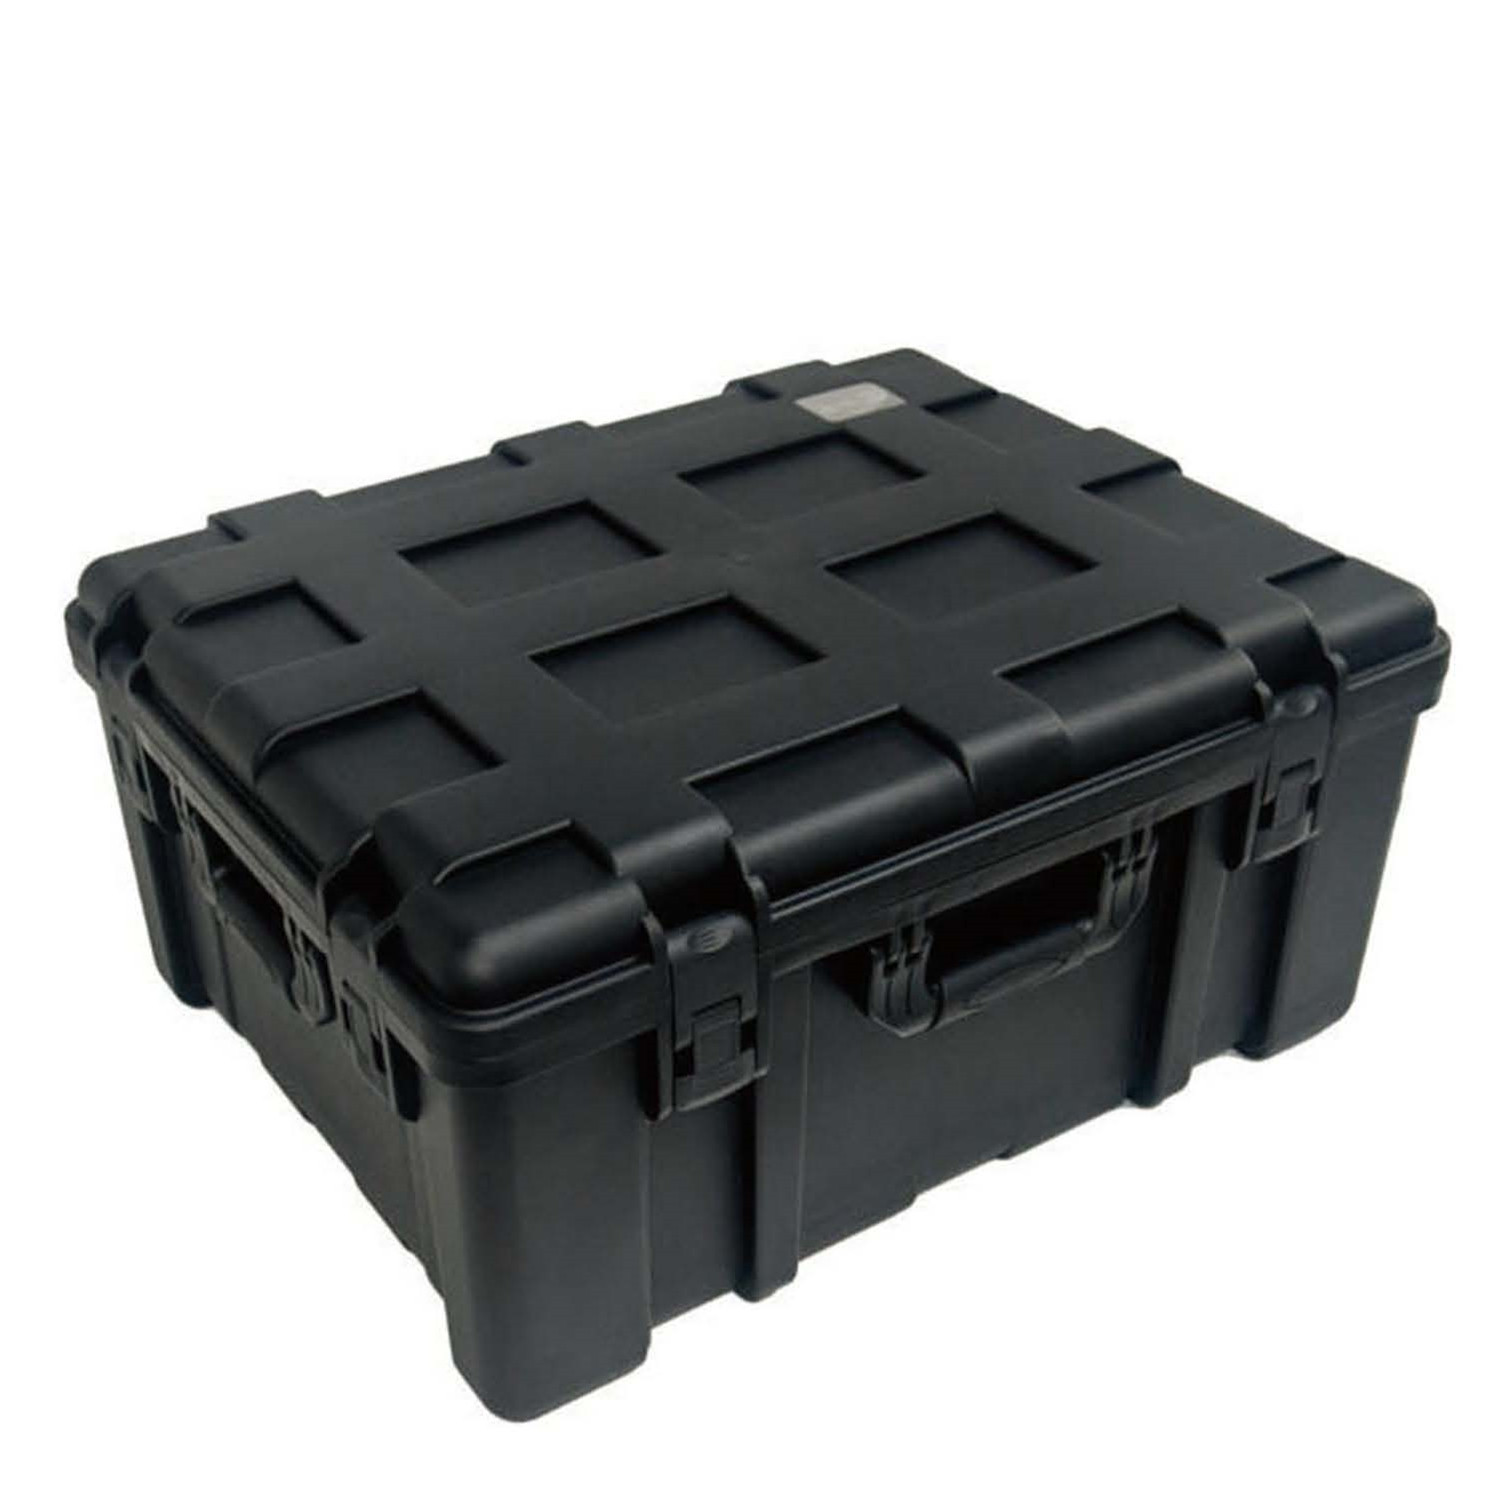 Hard Plastic Polypropylene Photography Travel Large Carry Case